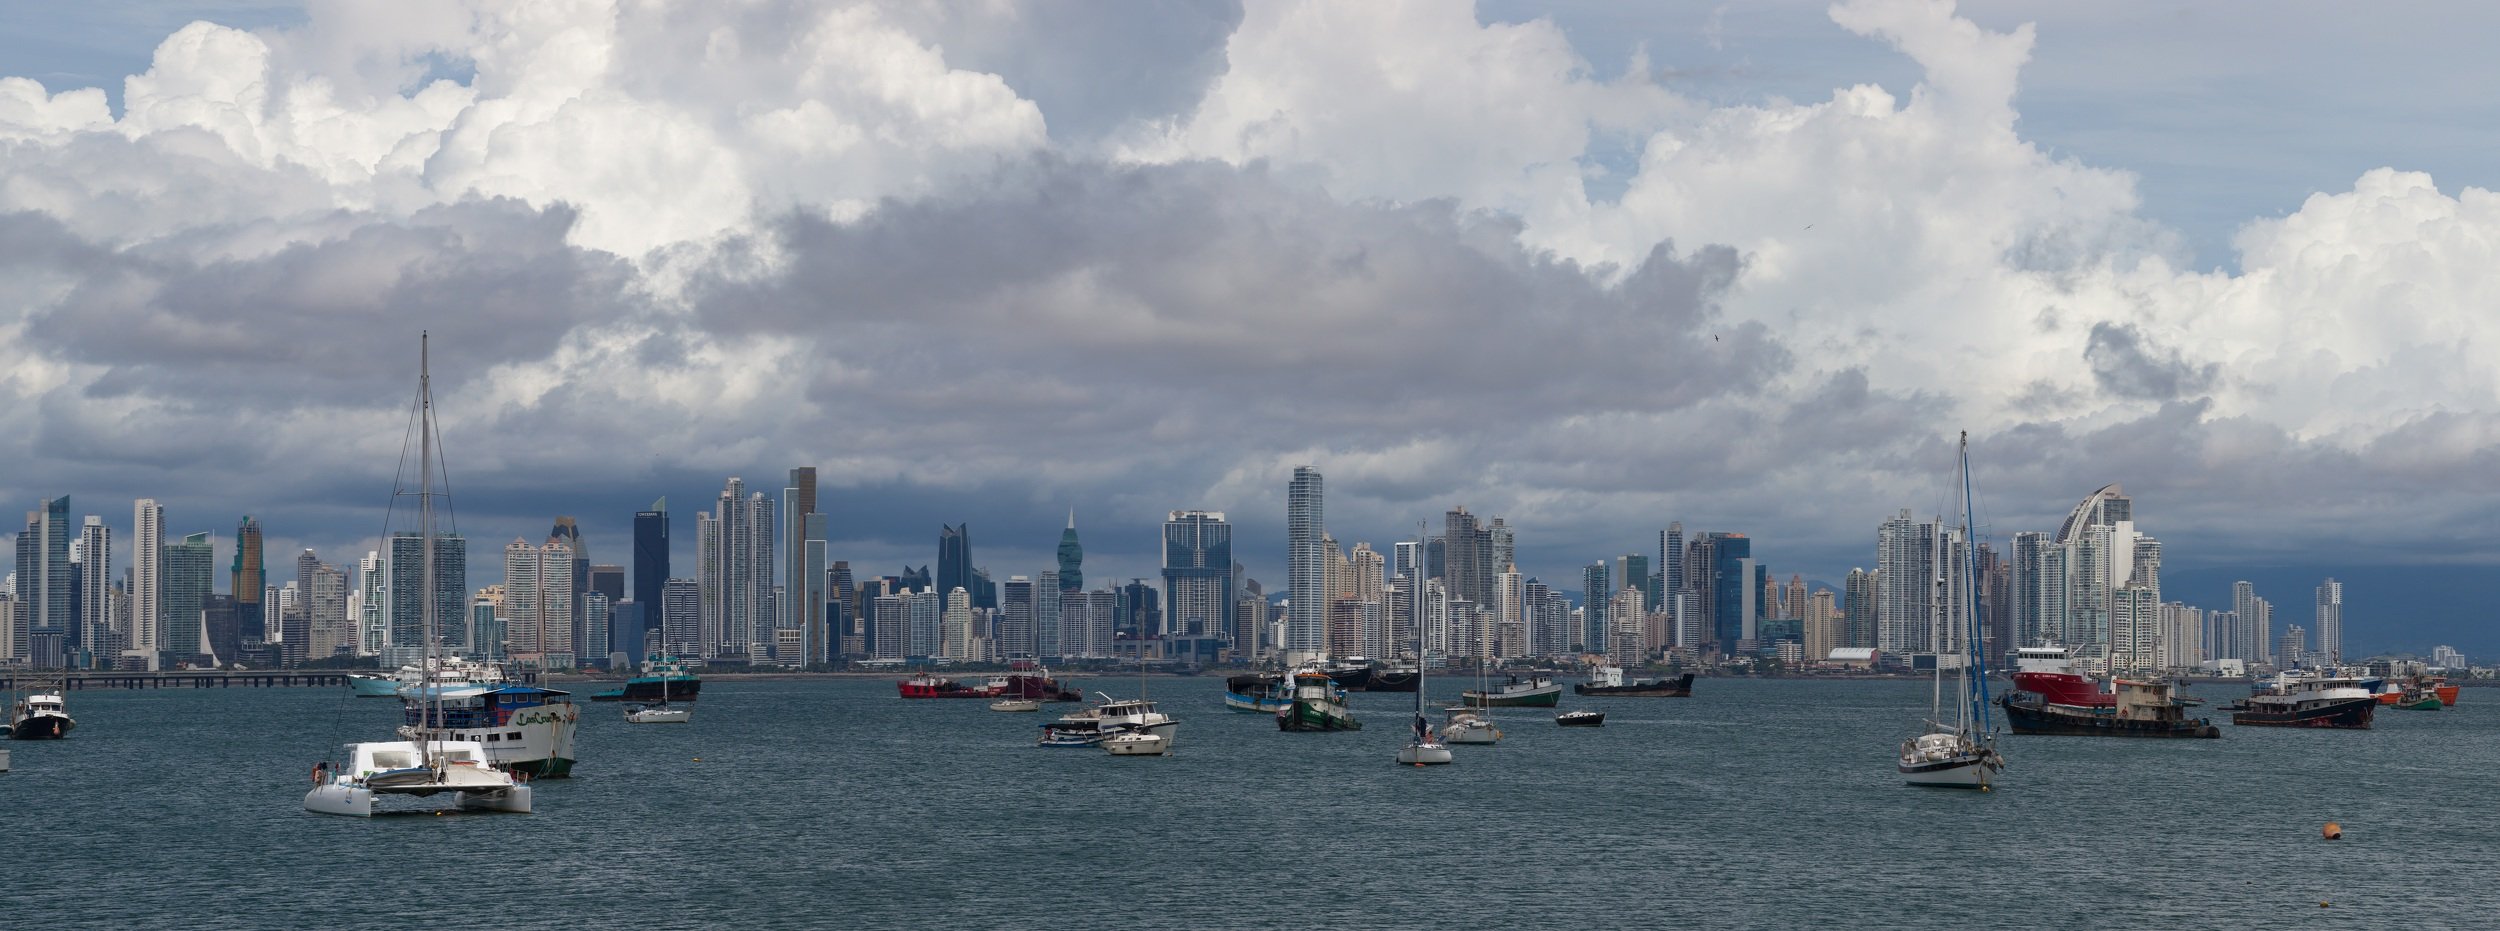 панама, панама-сити, город, океан, небо, облака, яхта, panama, panama-city, city, ocean, pacific, sky, clouds, yachts, Sindbad